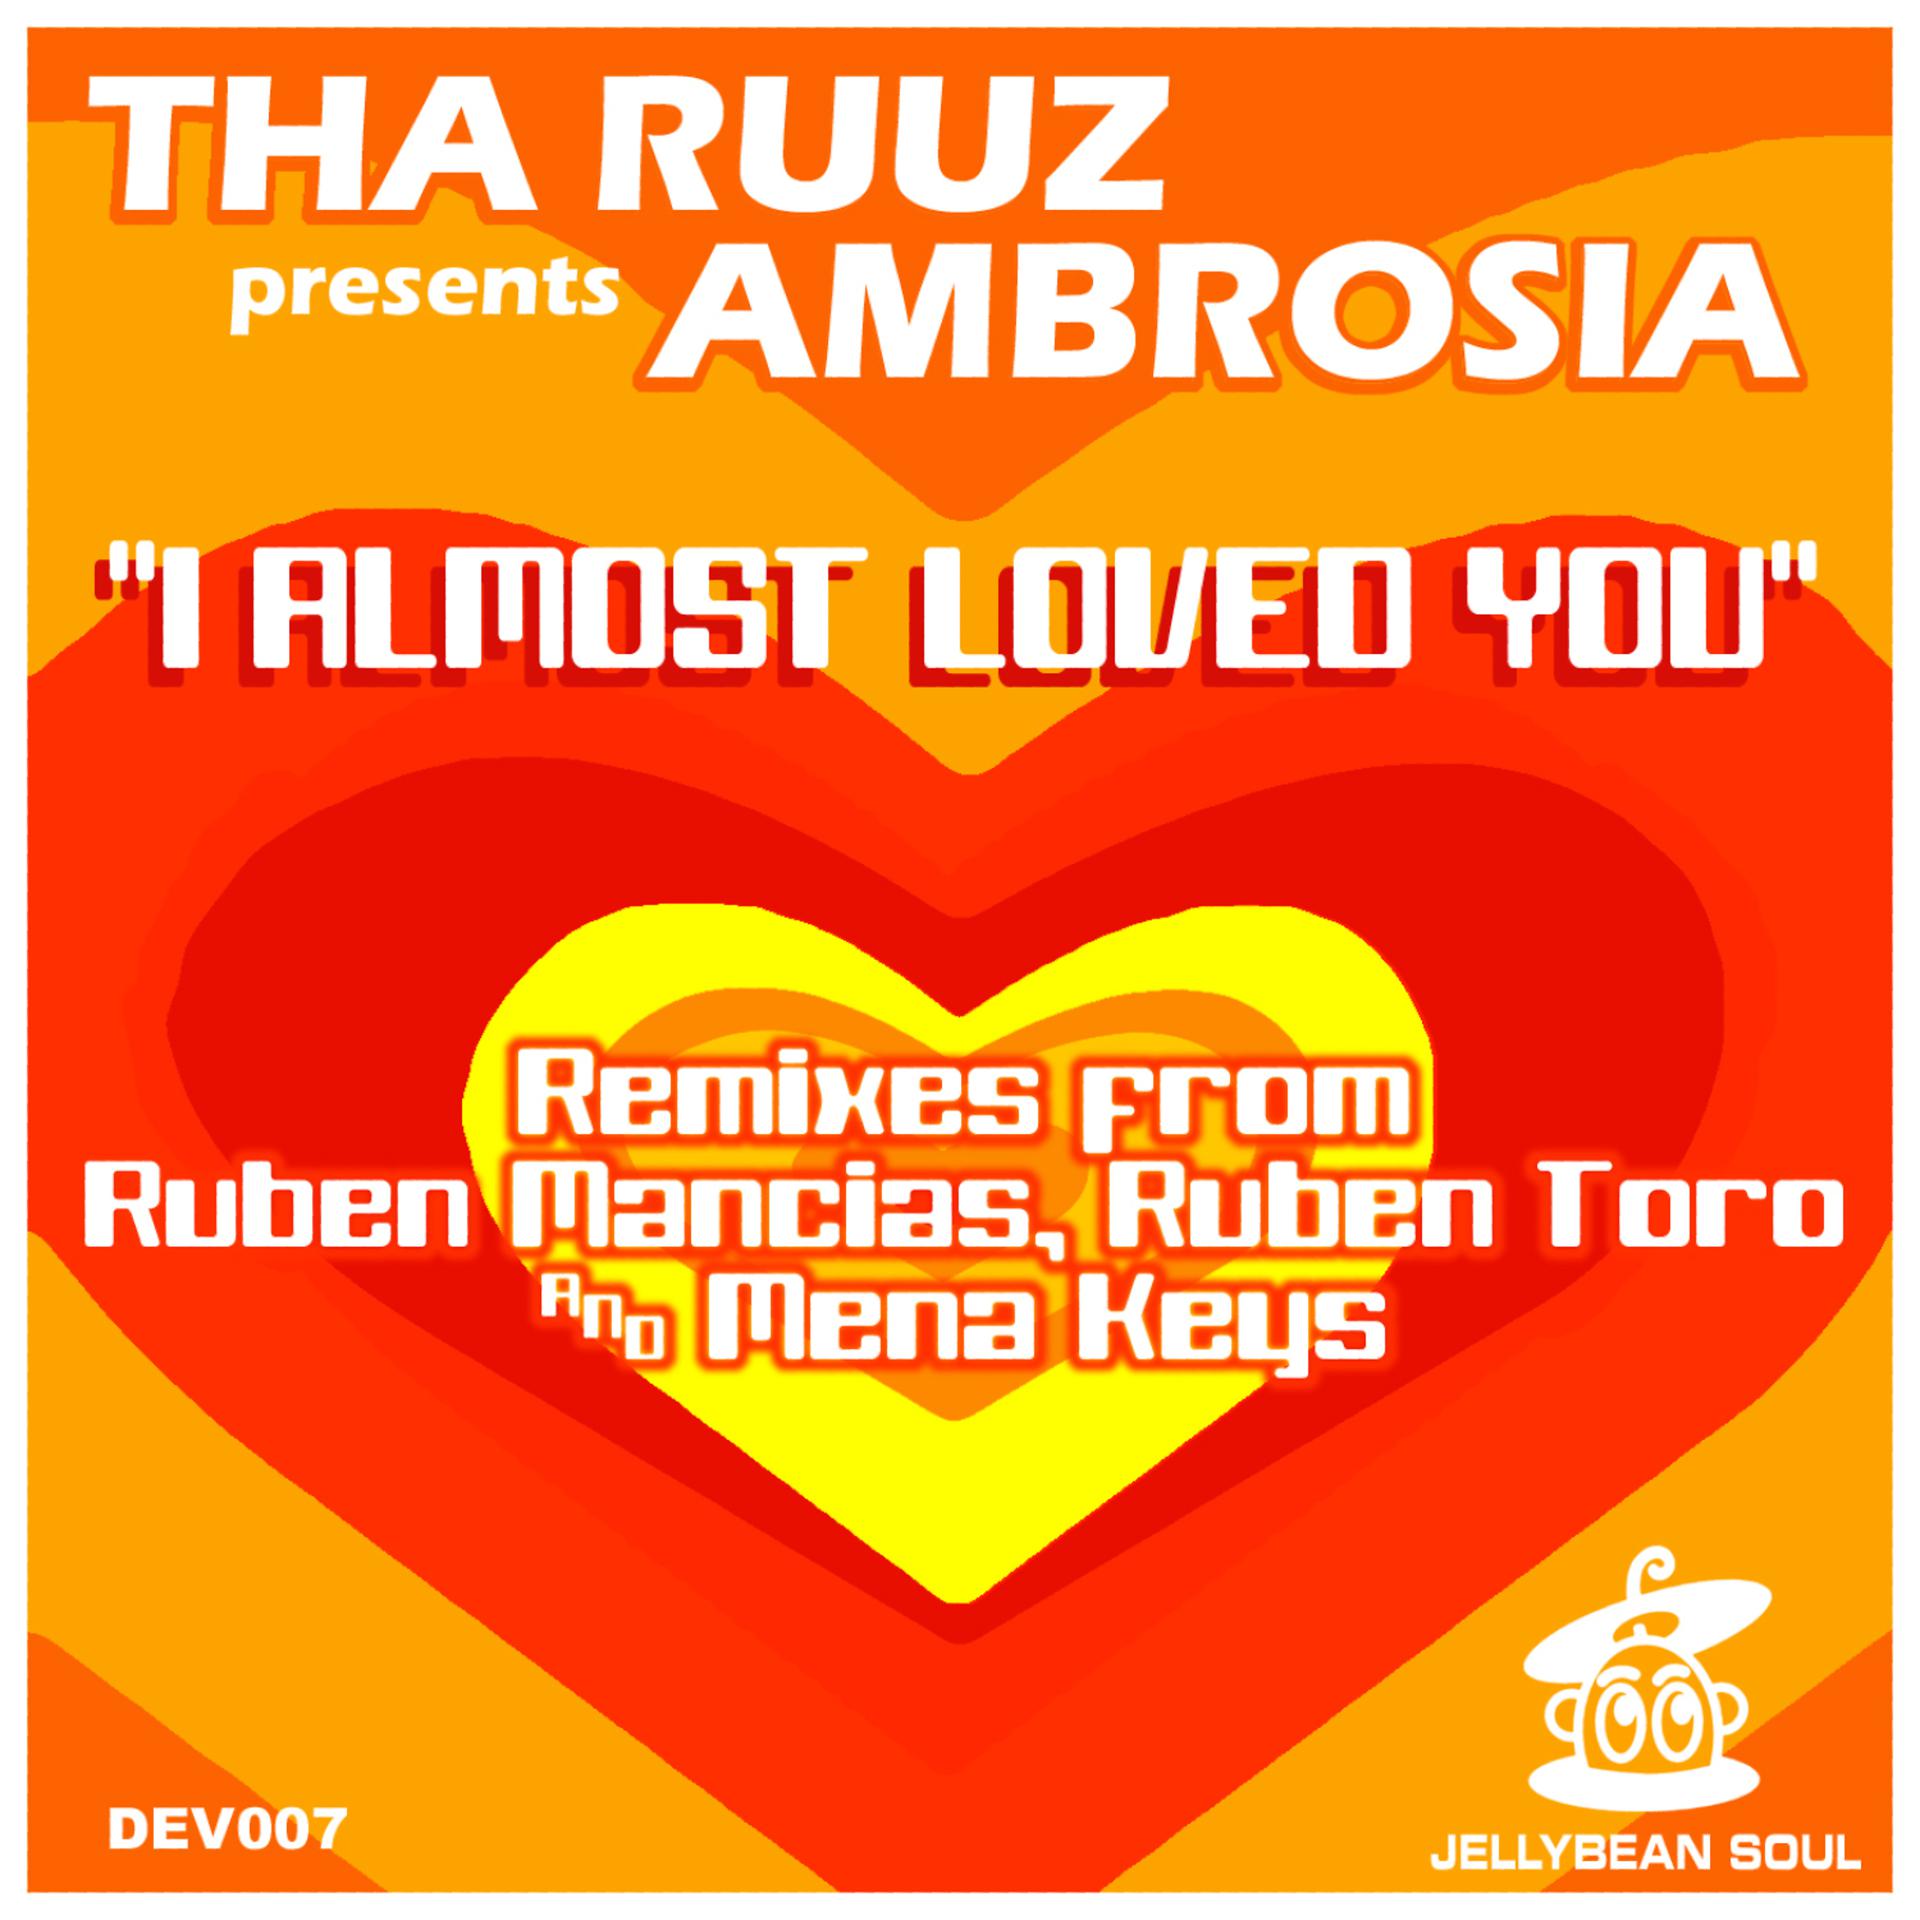 Постер к треку Ambrosia, Tha Ruuz - I Almost Loved You (Ruben Mancias Devotion Mix)